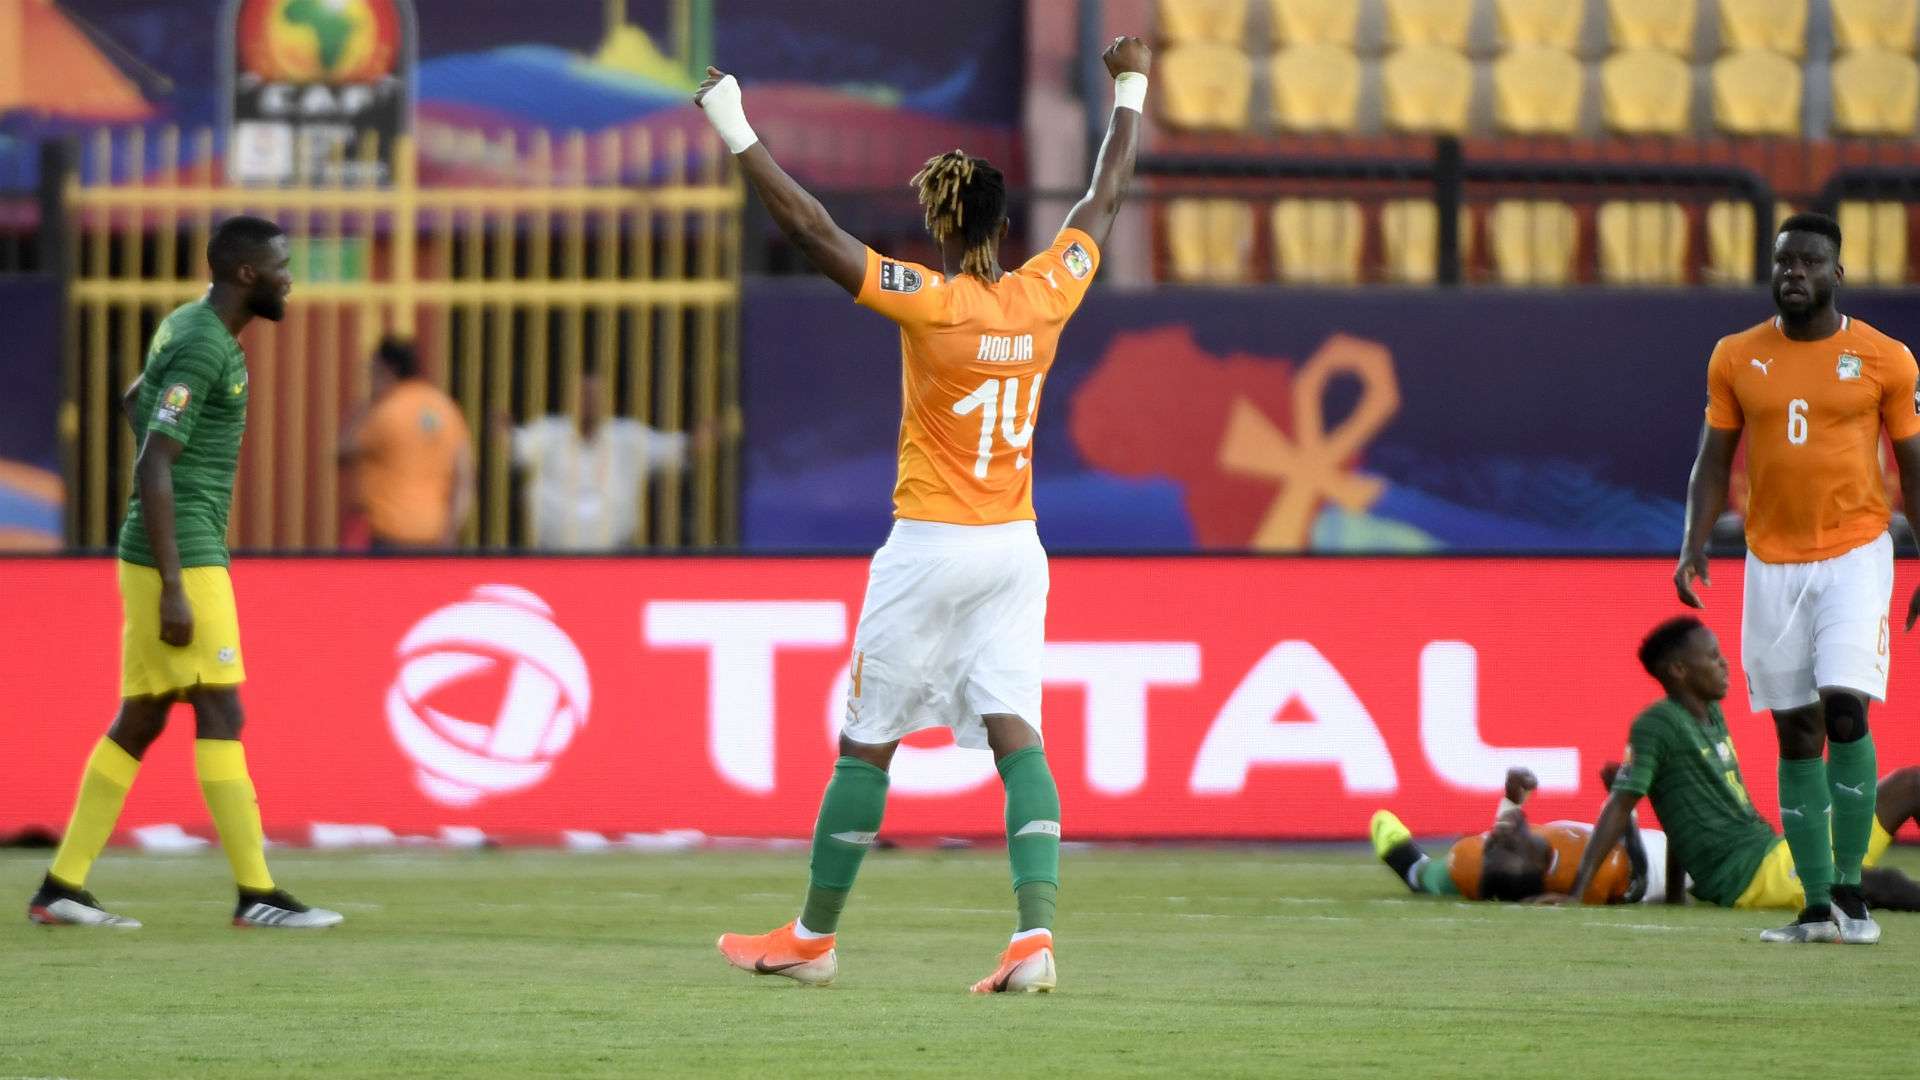 Ivory Coast v South Africa, June 2019